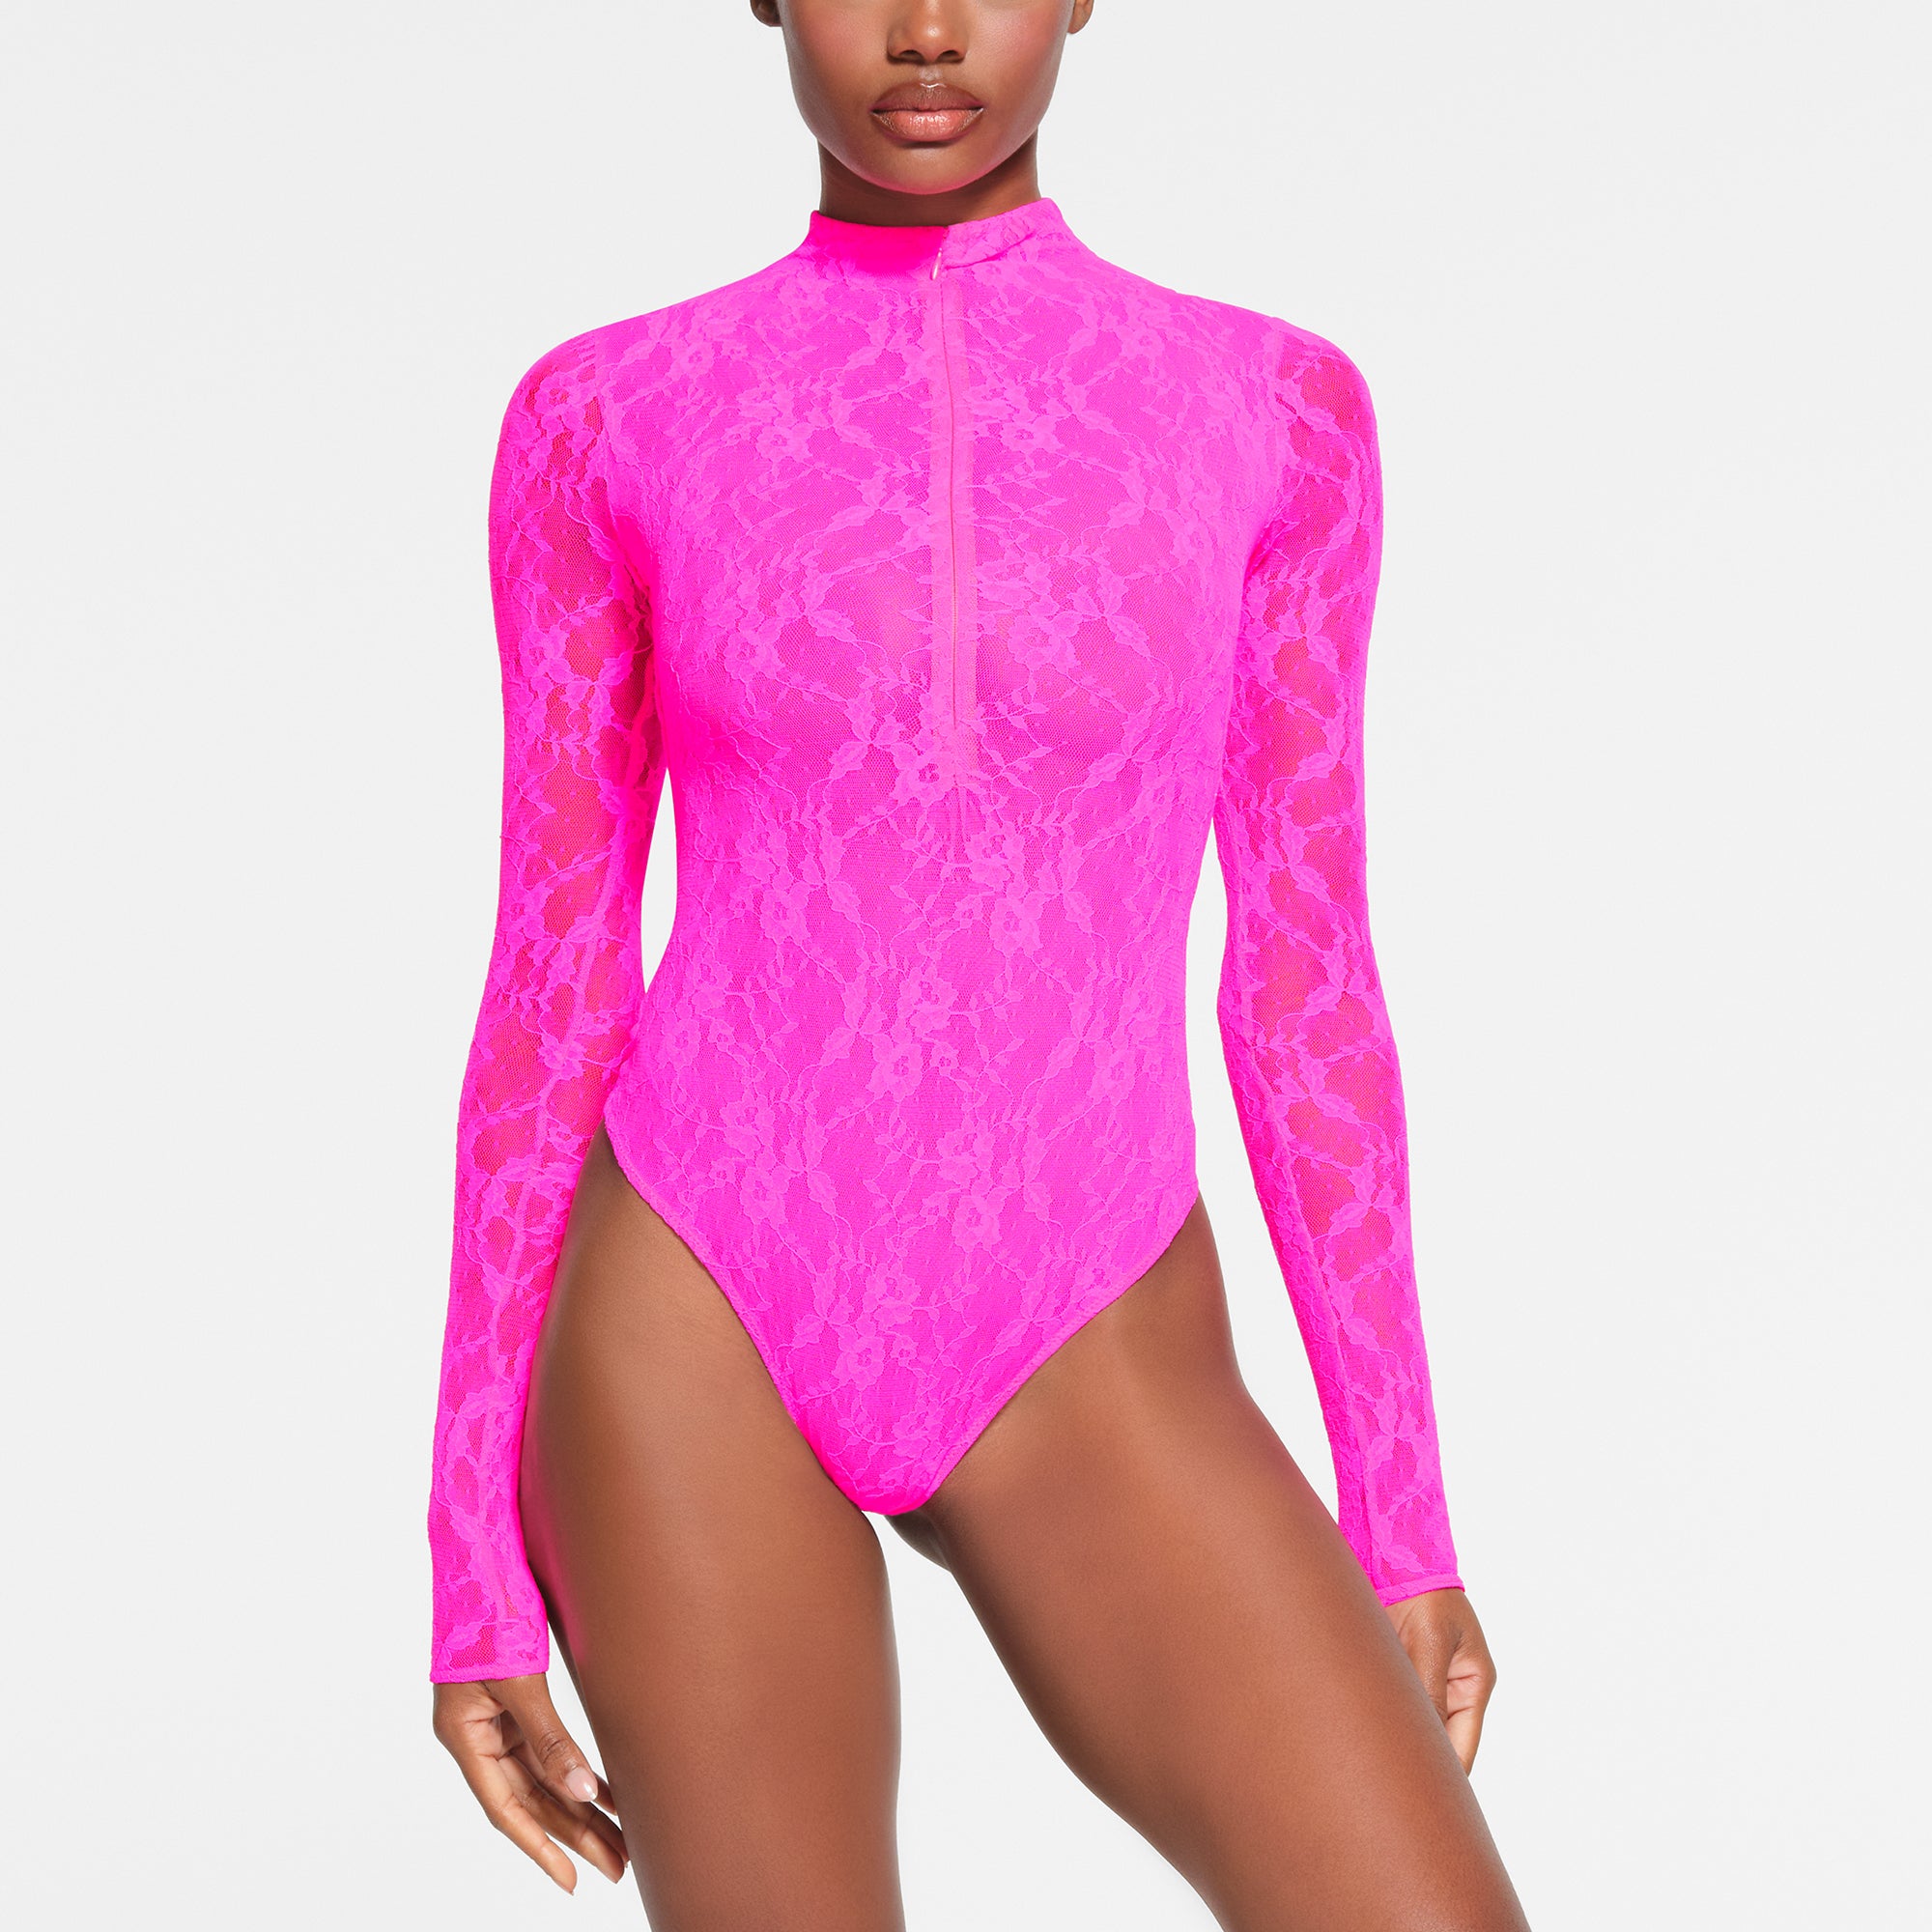 Sexy Bodysuit Women Long Sleeve Deep V Lingerie Pink Body Jumpsuit